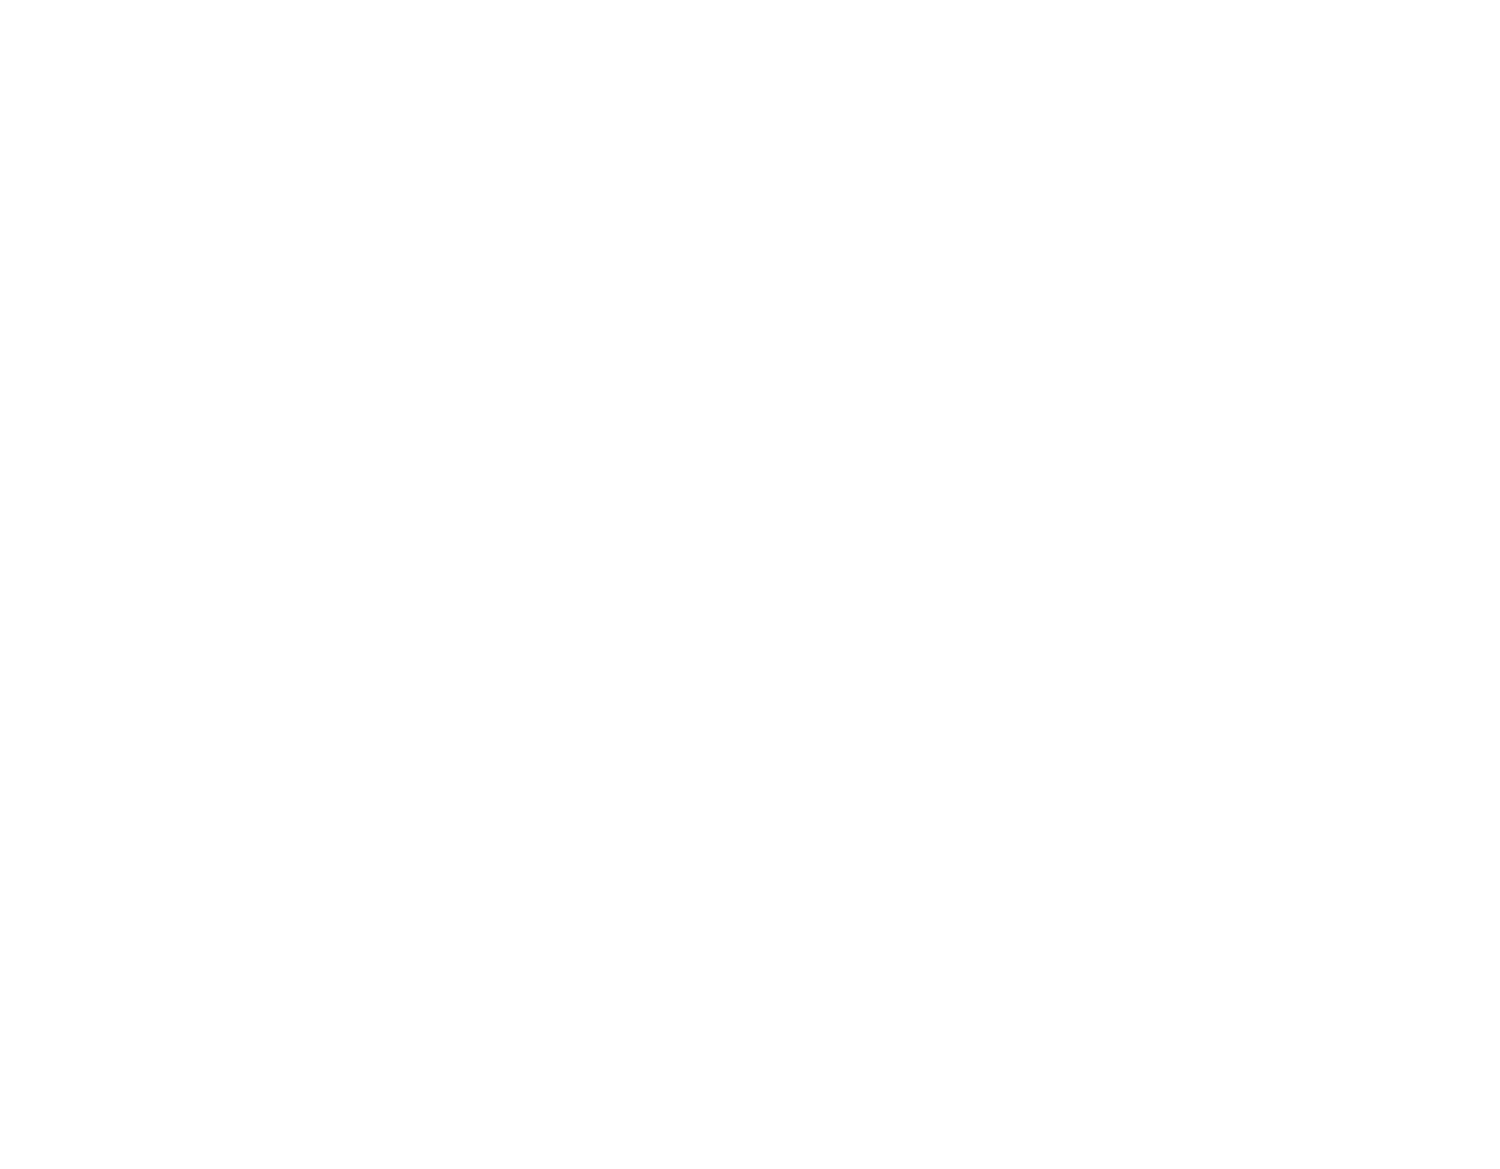 Michelle Loufman | Photographer and Visual Storyteller